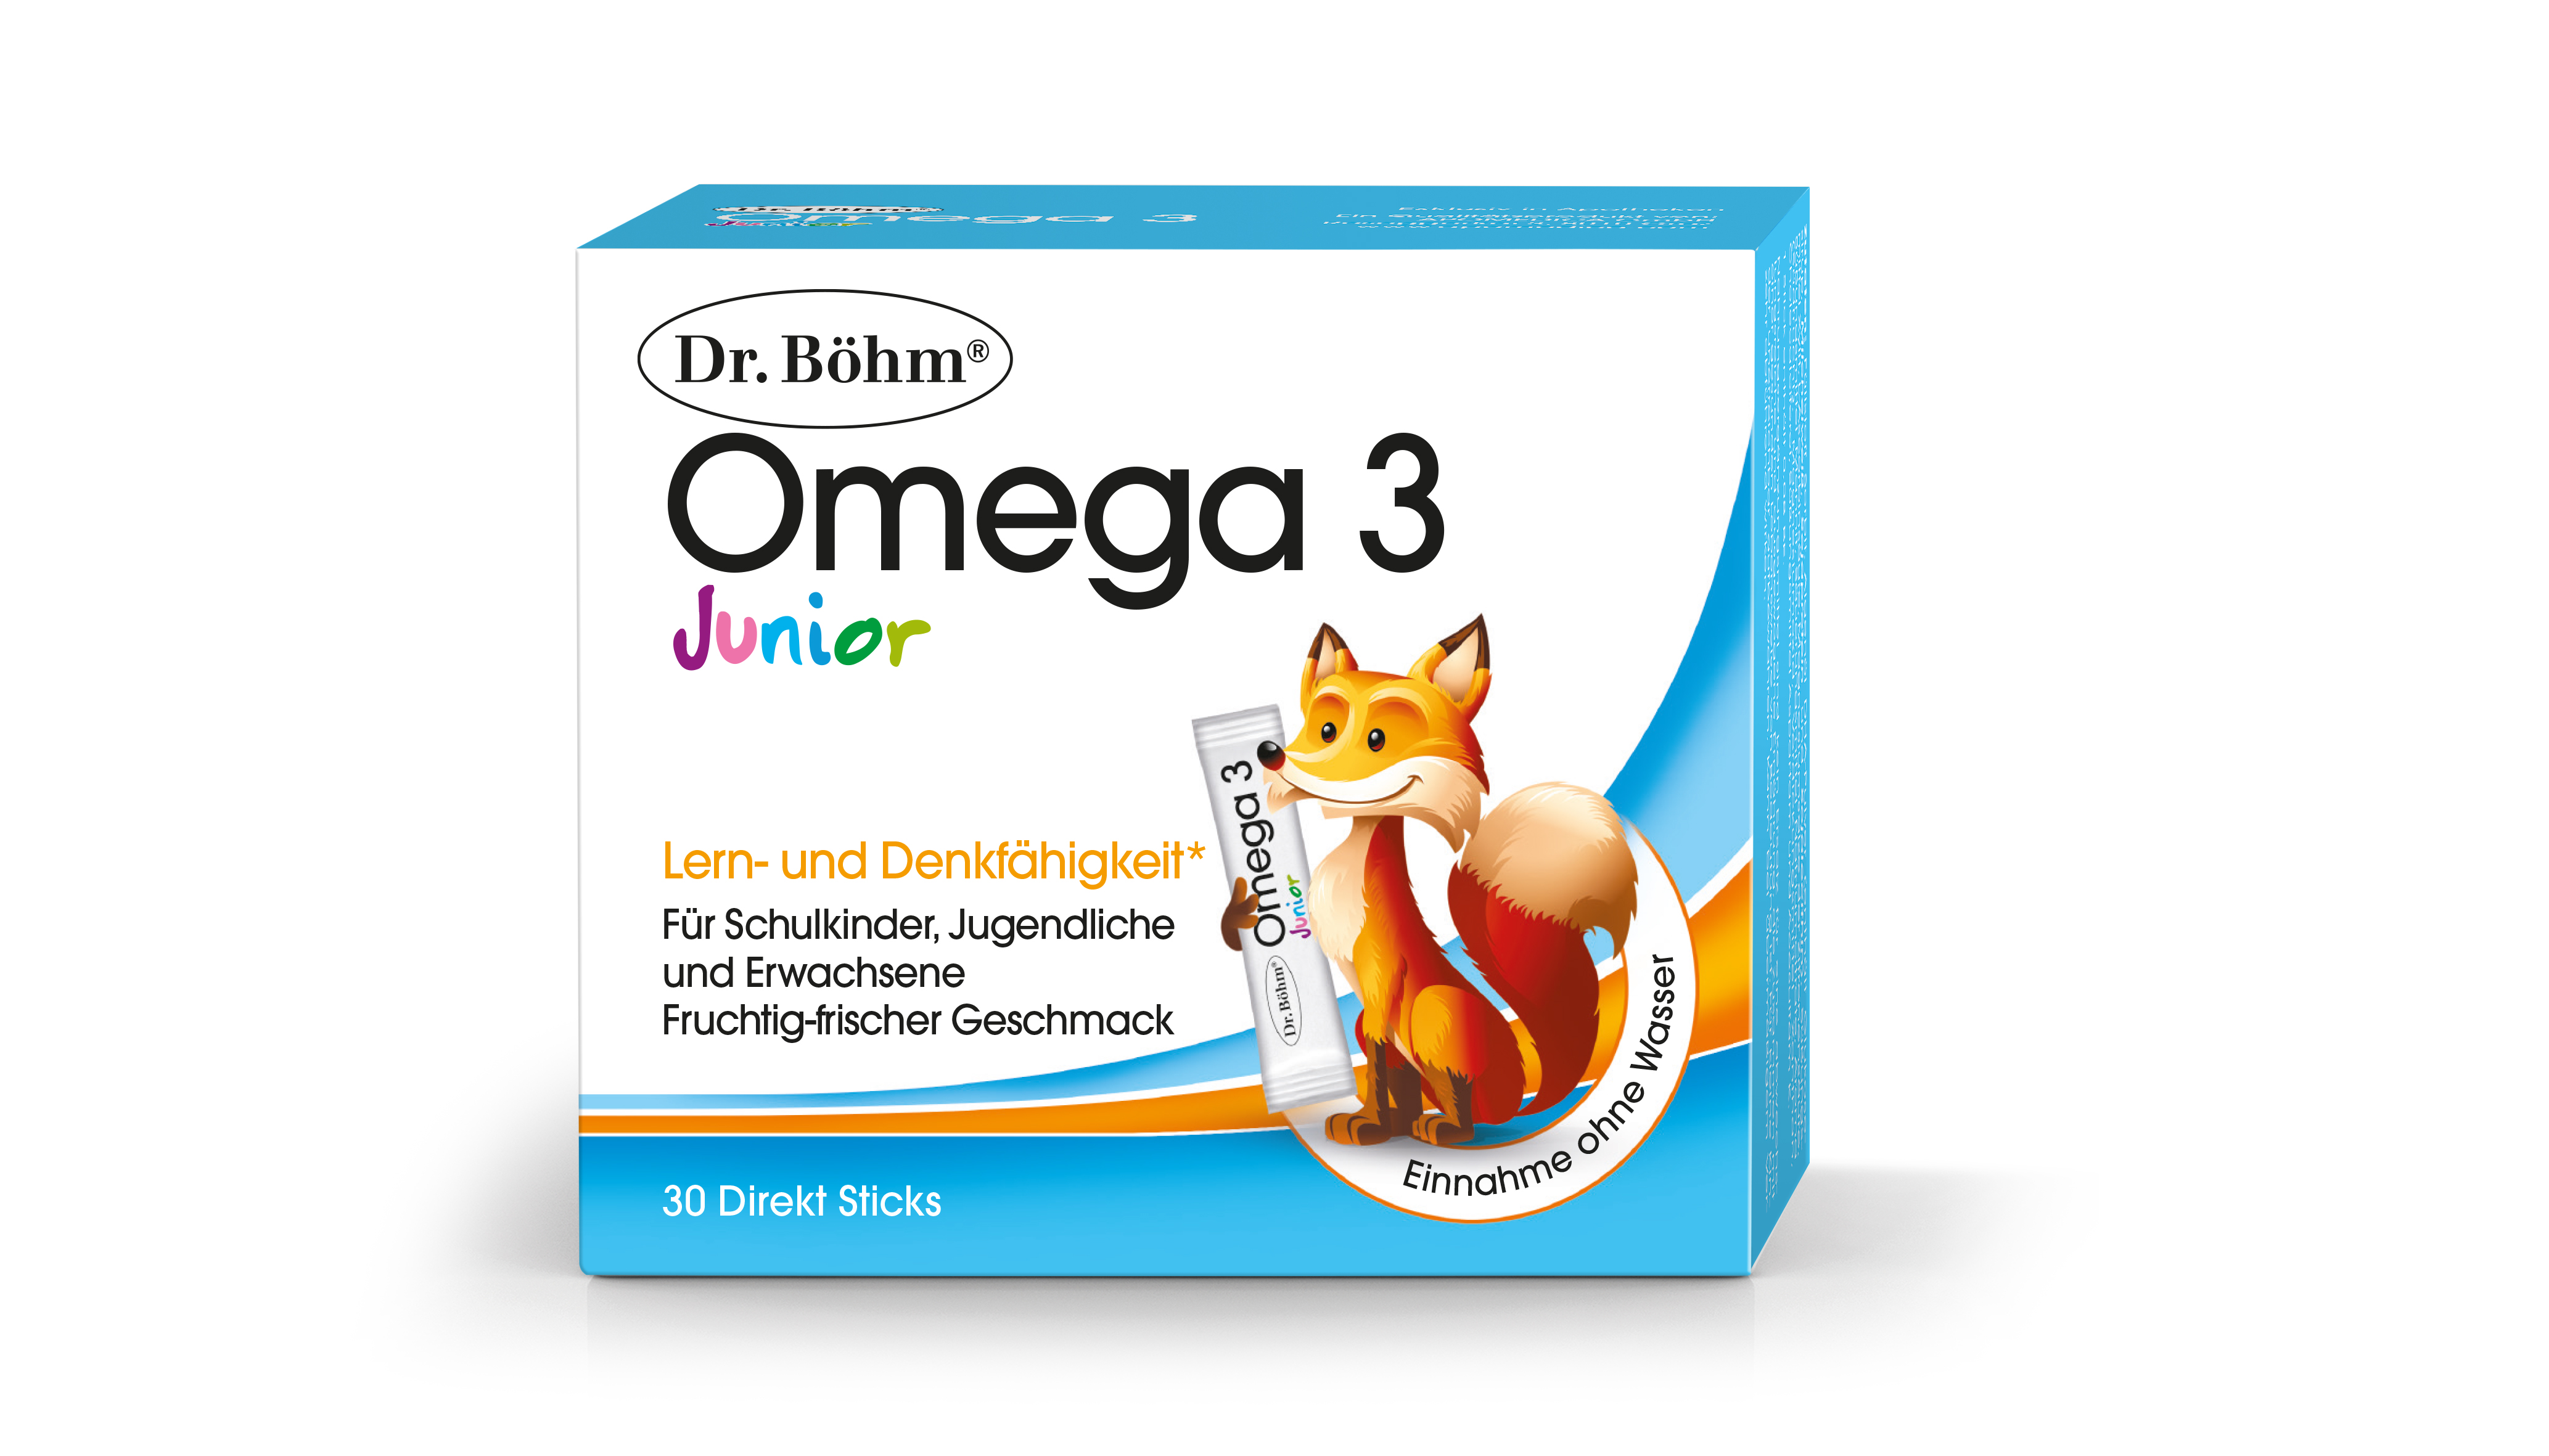 Dr. Böhm Omega-3 Direkt Sticks Junior